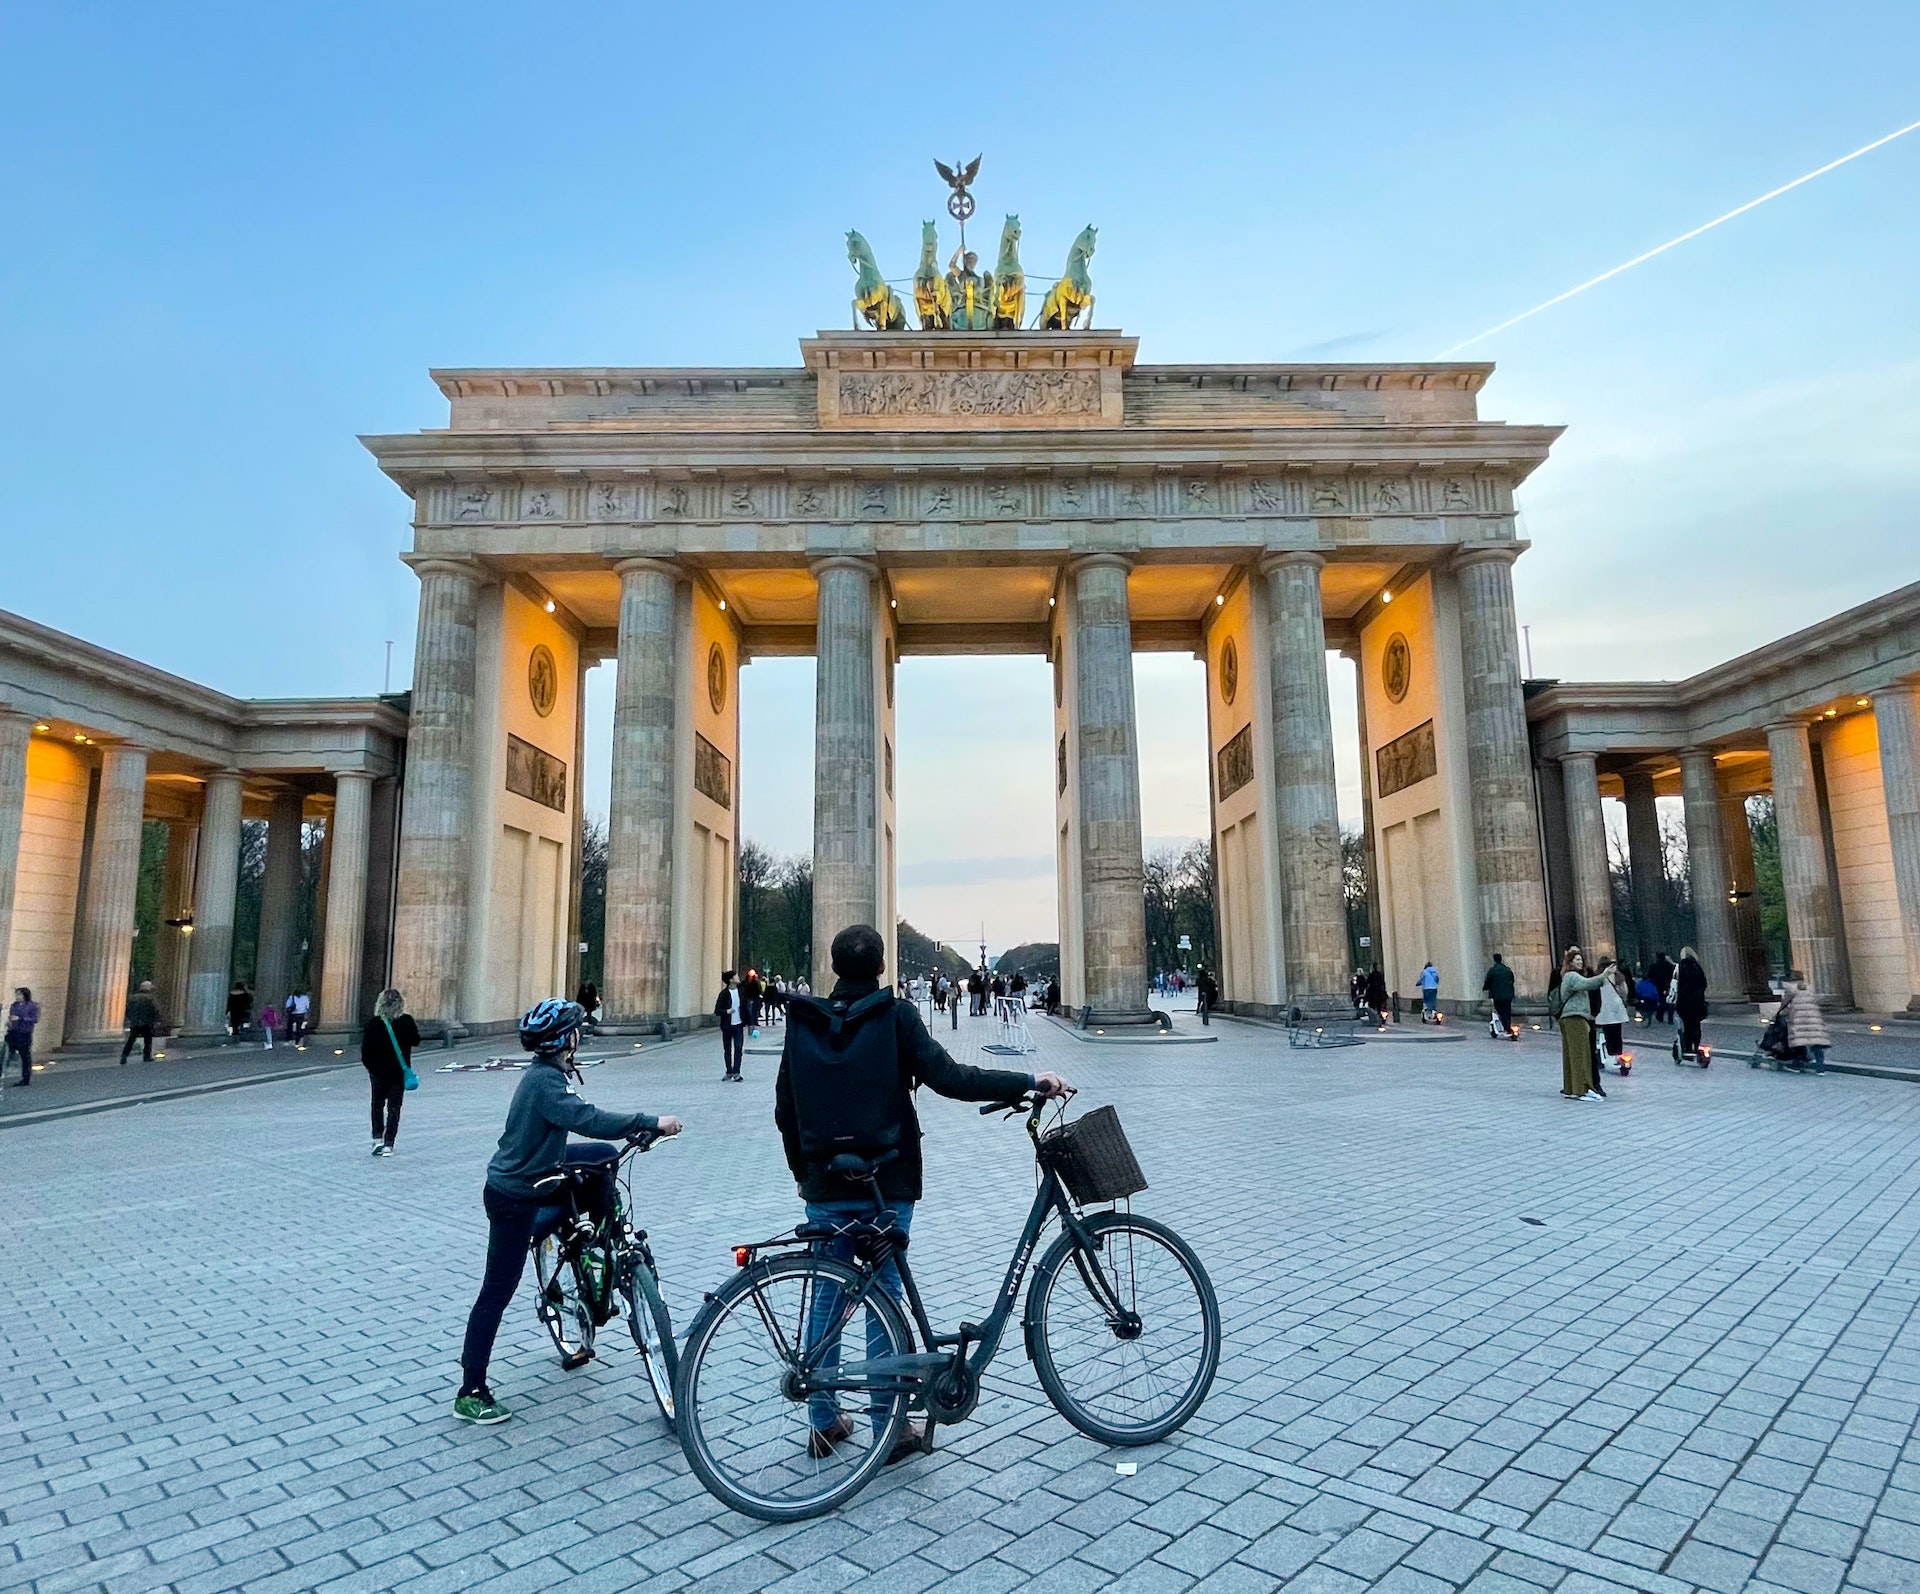 Cycling through Berlin